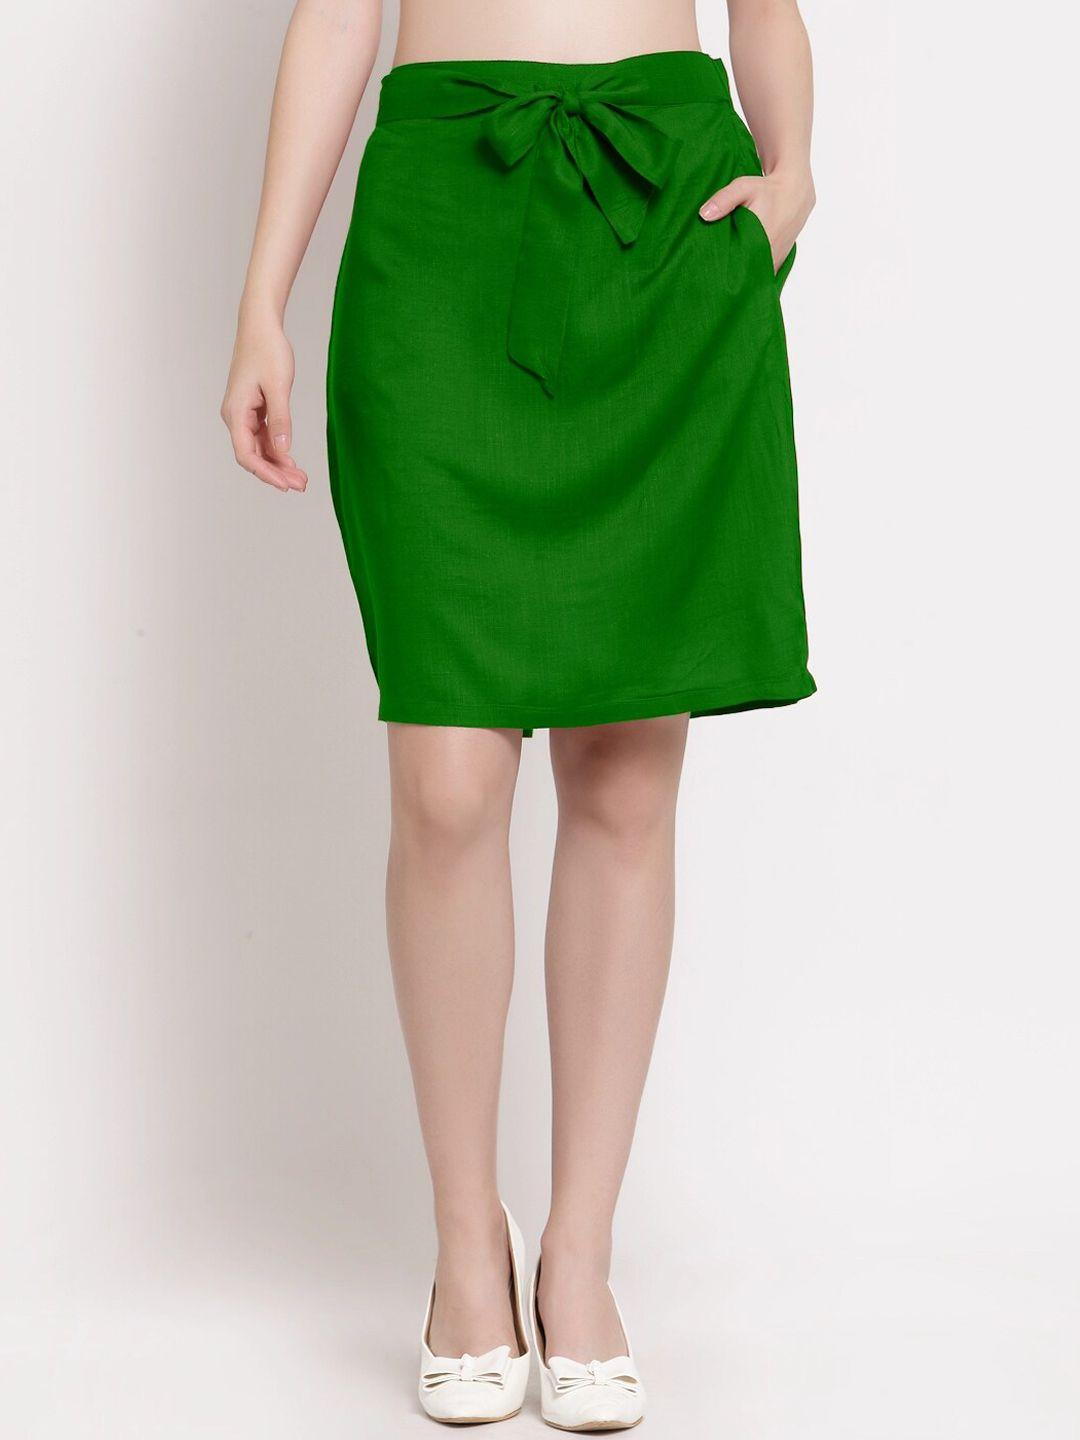 patrorna women green solid pencil skirt